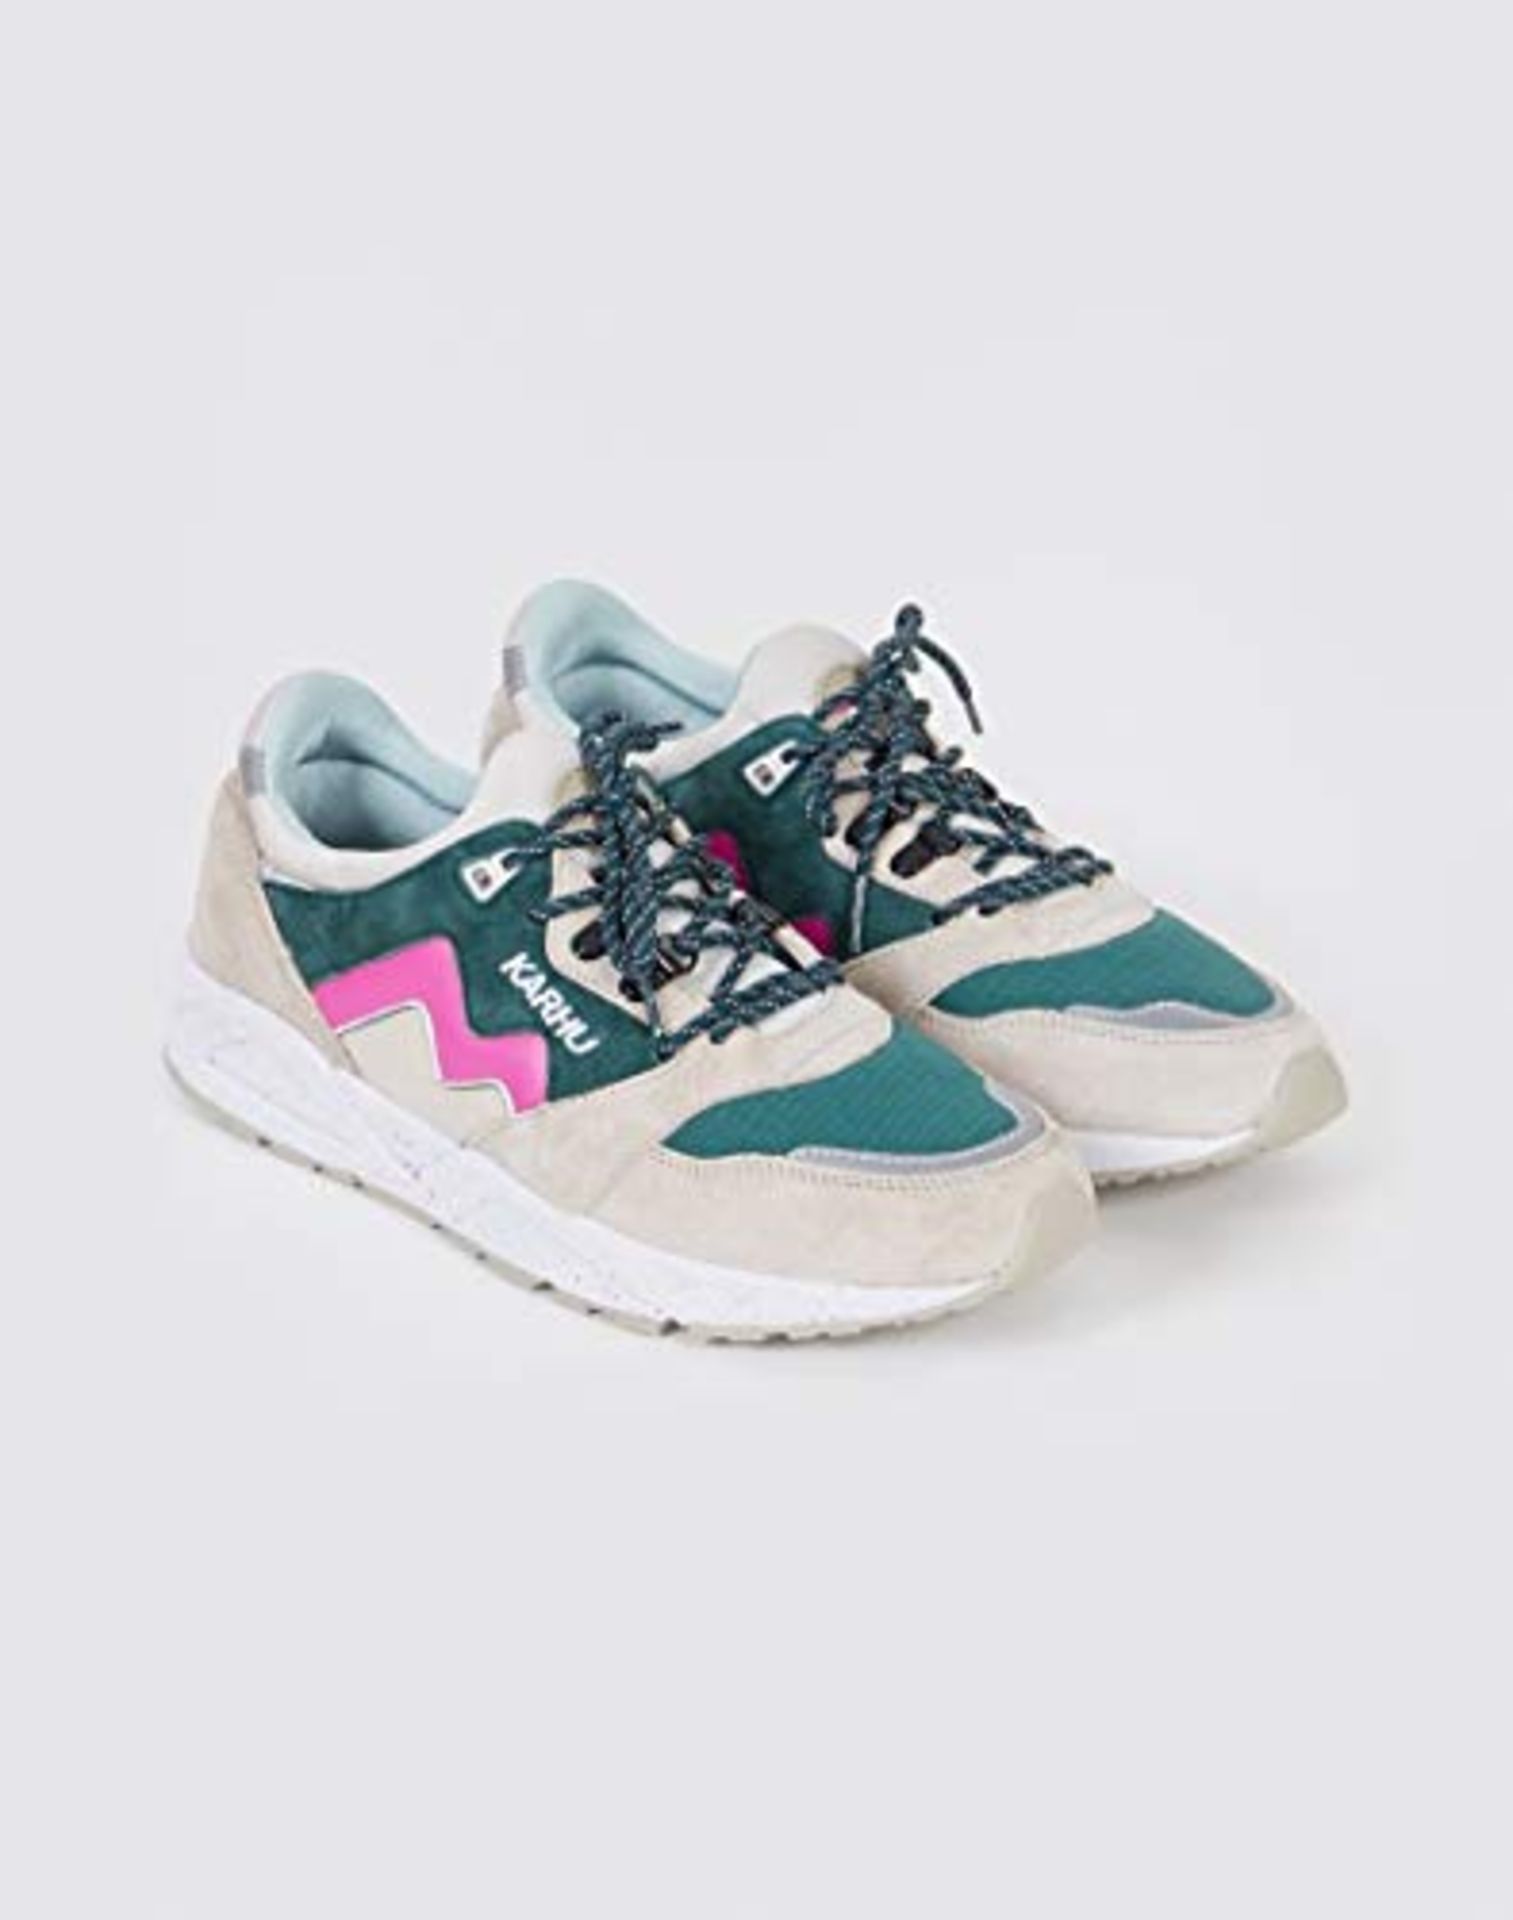 1 x Karhu Men's Sneaker Aria Multicolore in Suede E Nylon 8(US) -7(UK) Multicolour Size: 7 UK | EAN